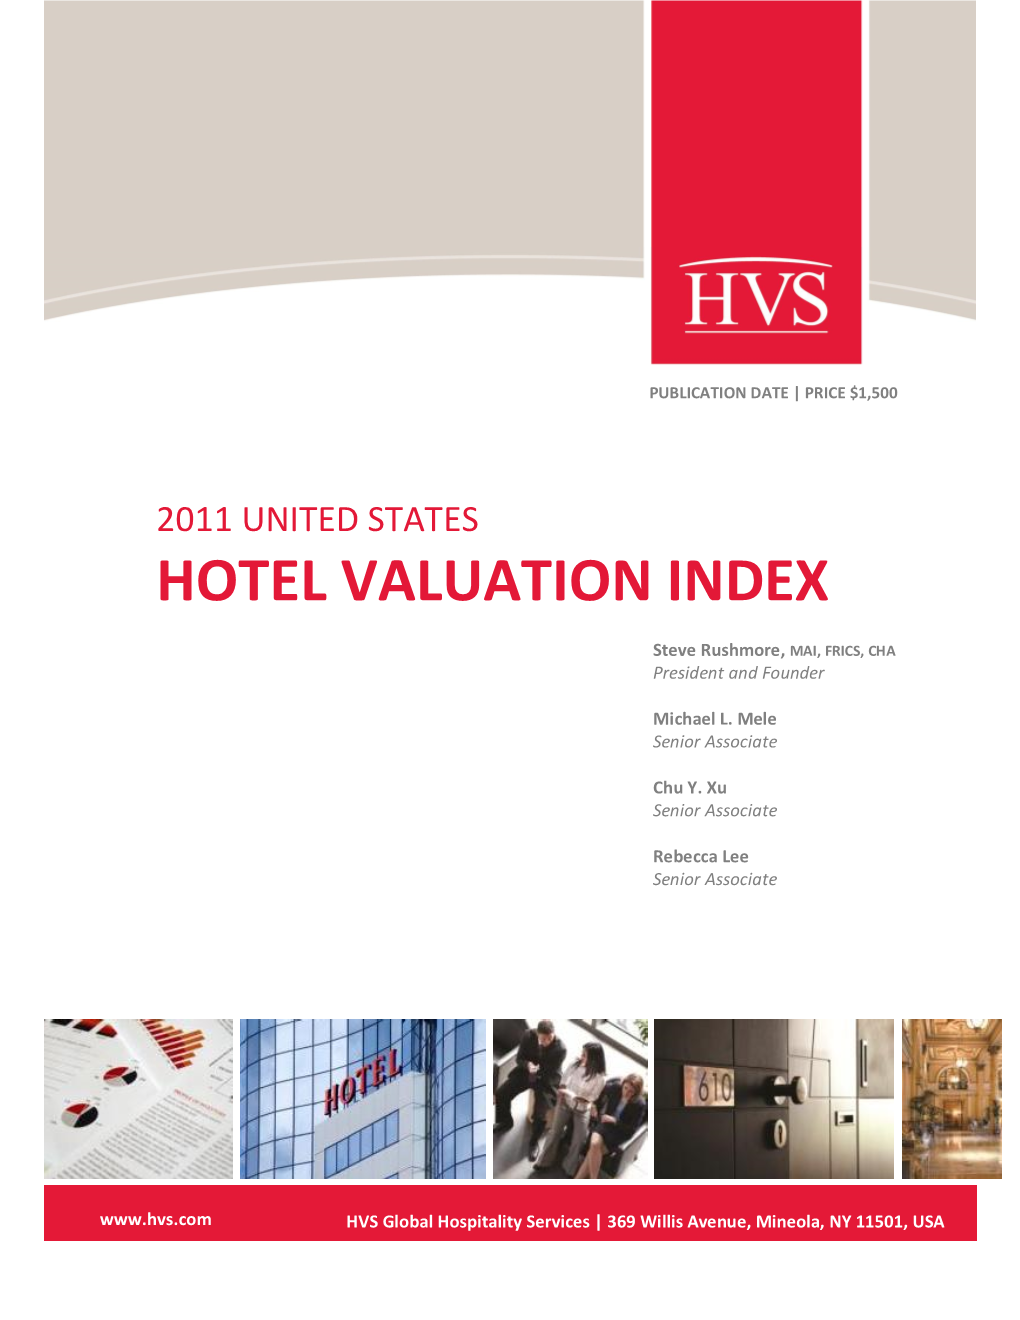 Hotel Valuation Index